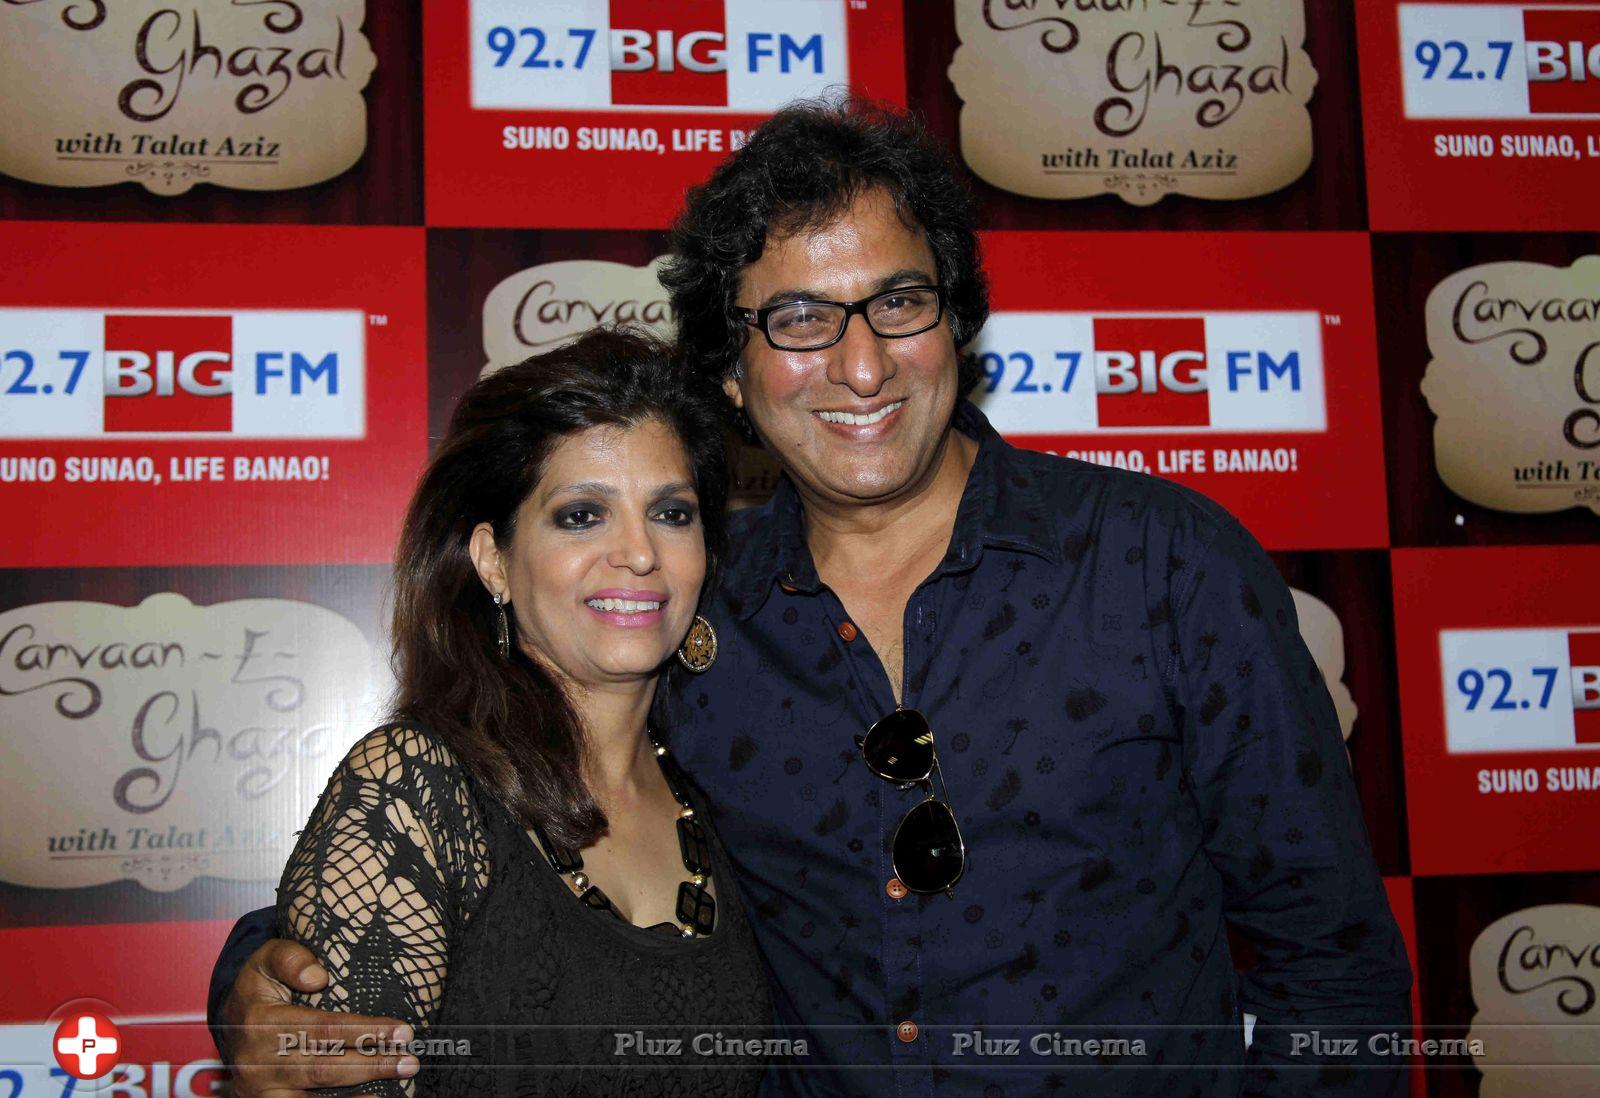 Carvaan E Ghazal most heard radio show on 92.7 BIG FM Photos | Picture 735511